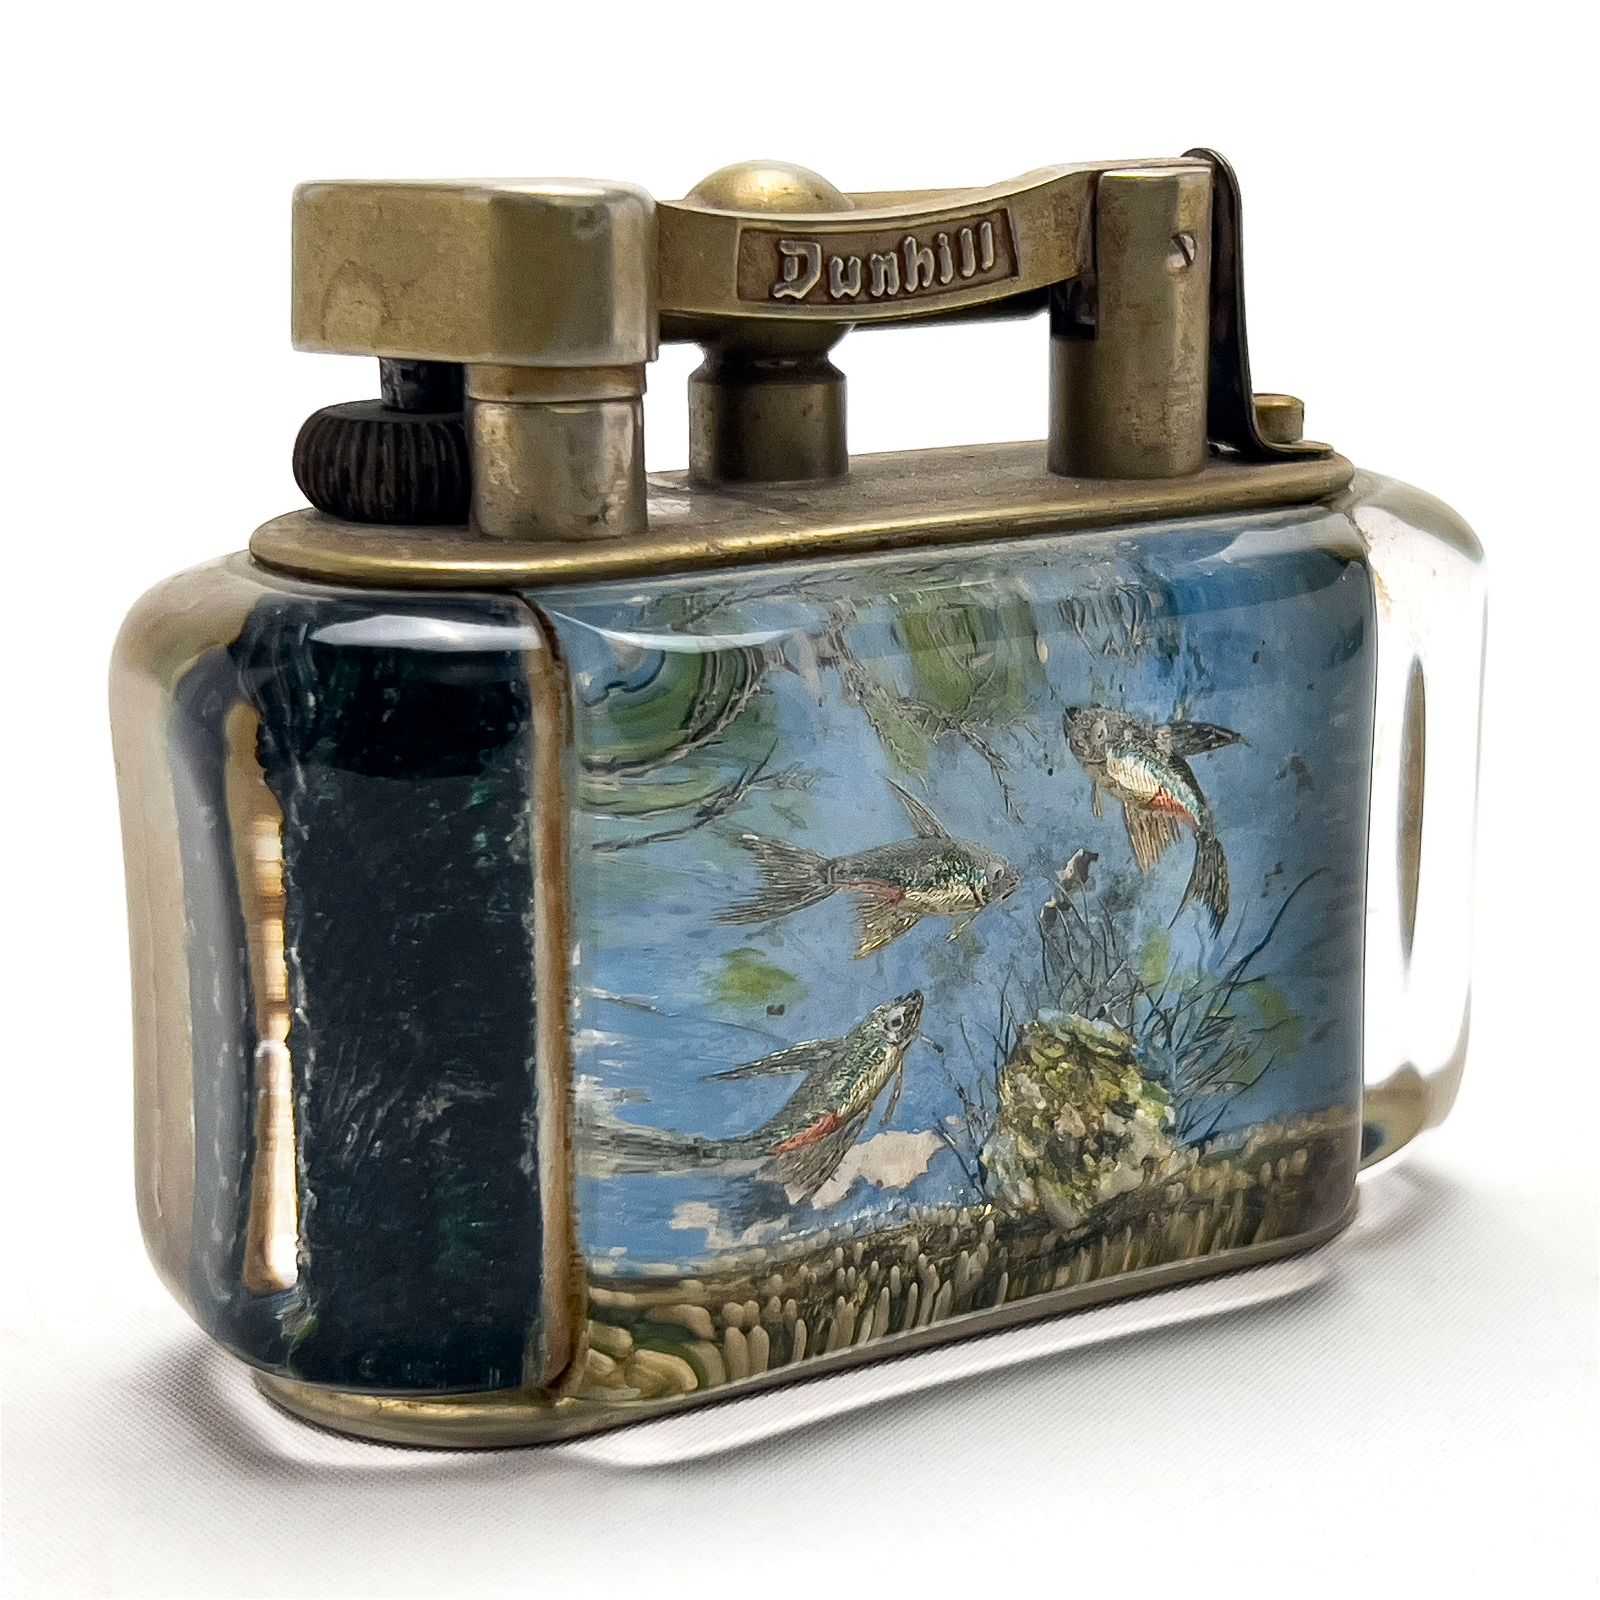 Alfred Dunhill 'Aquarium' Lighter, estimated at $2,000-$3,000 at Capsule Auctions.